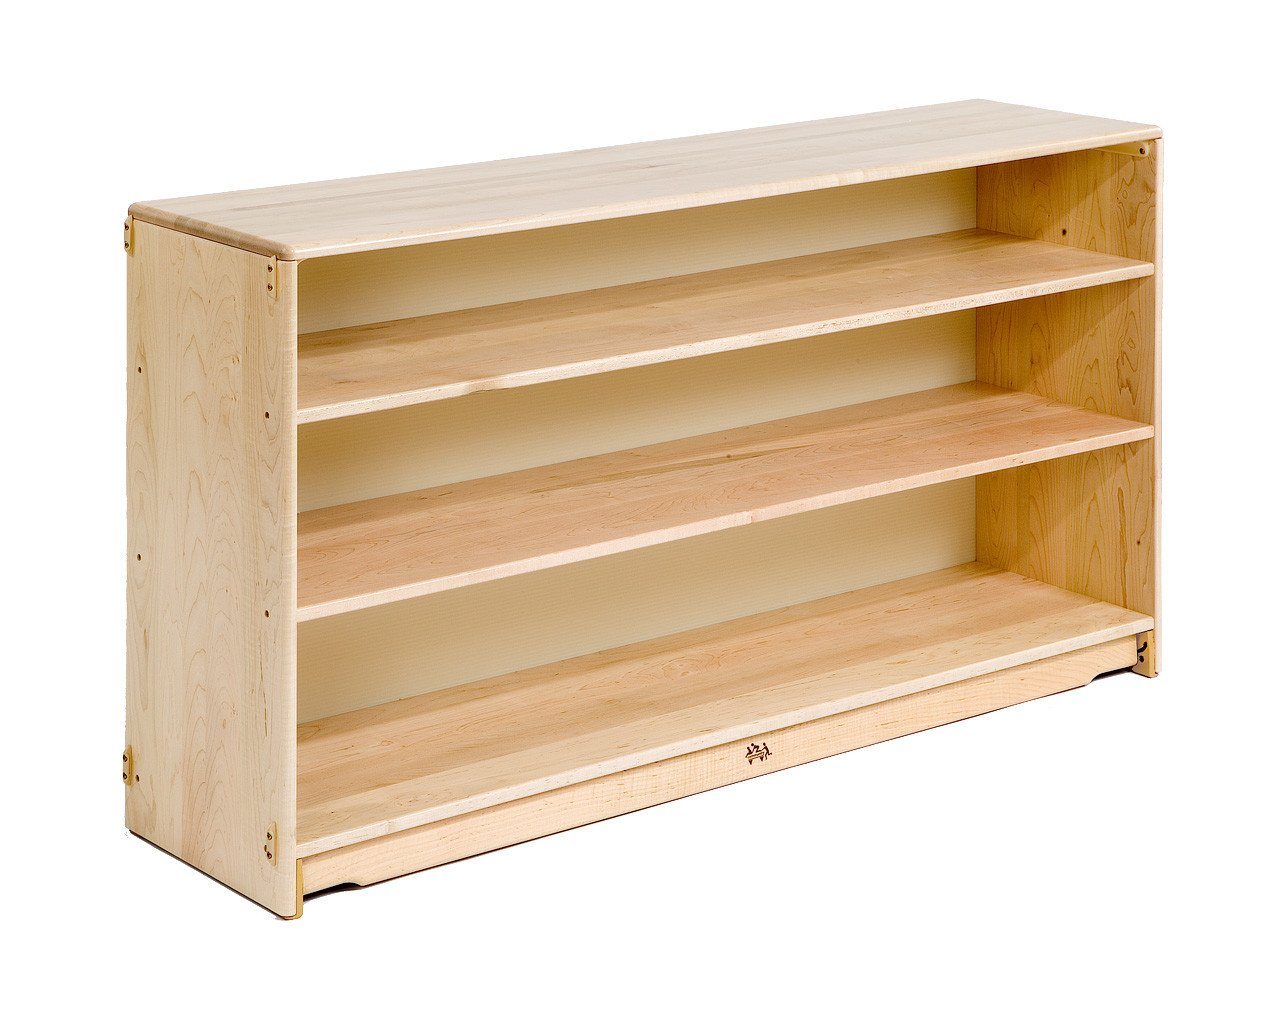 Fixed Shelf 5' x 32" by Community Playthings - louisekool